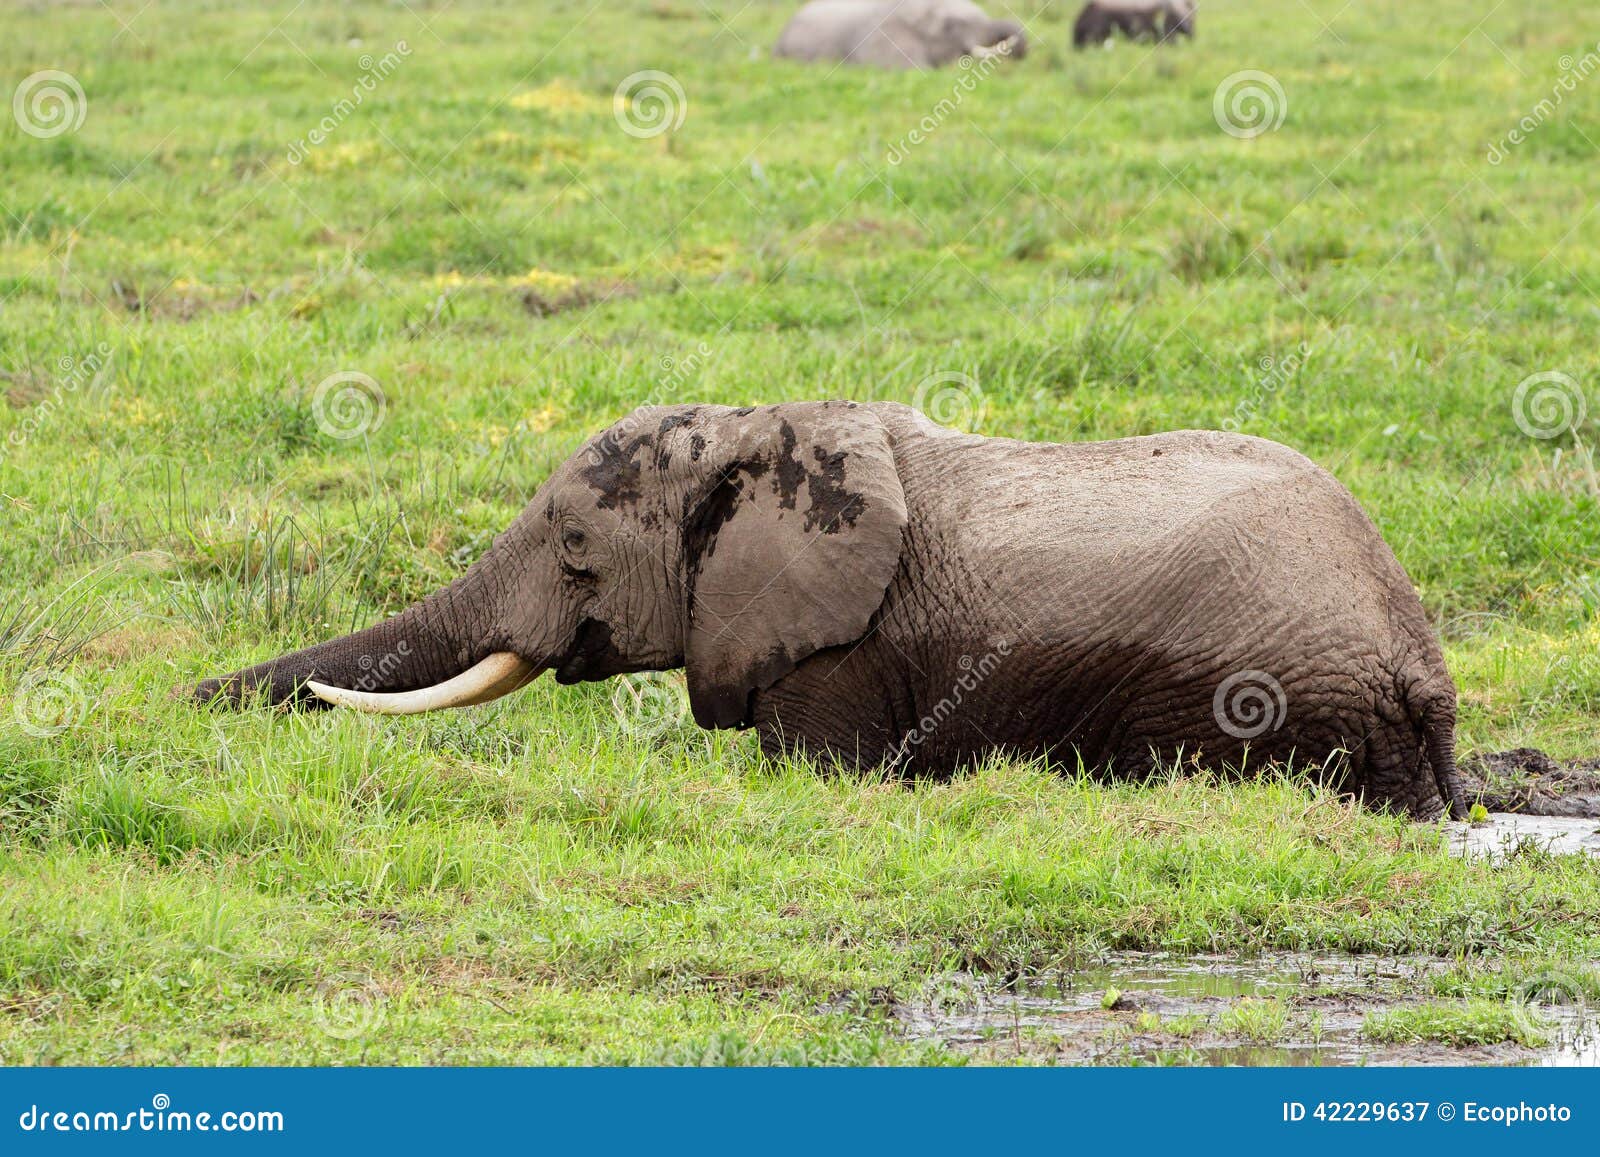 african elephant in marshland